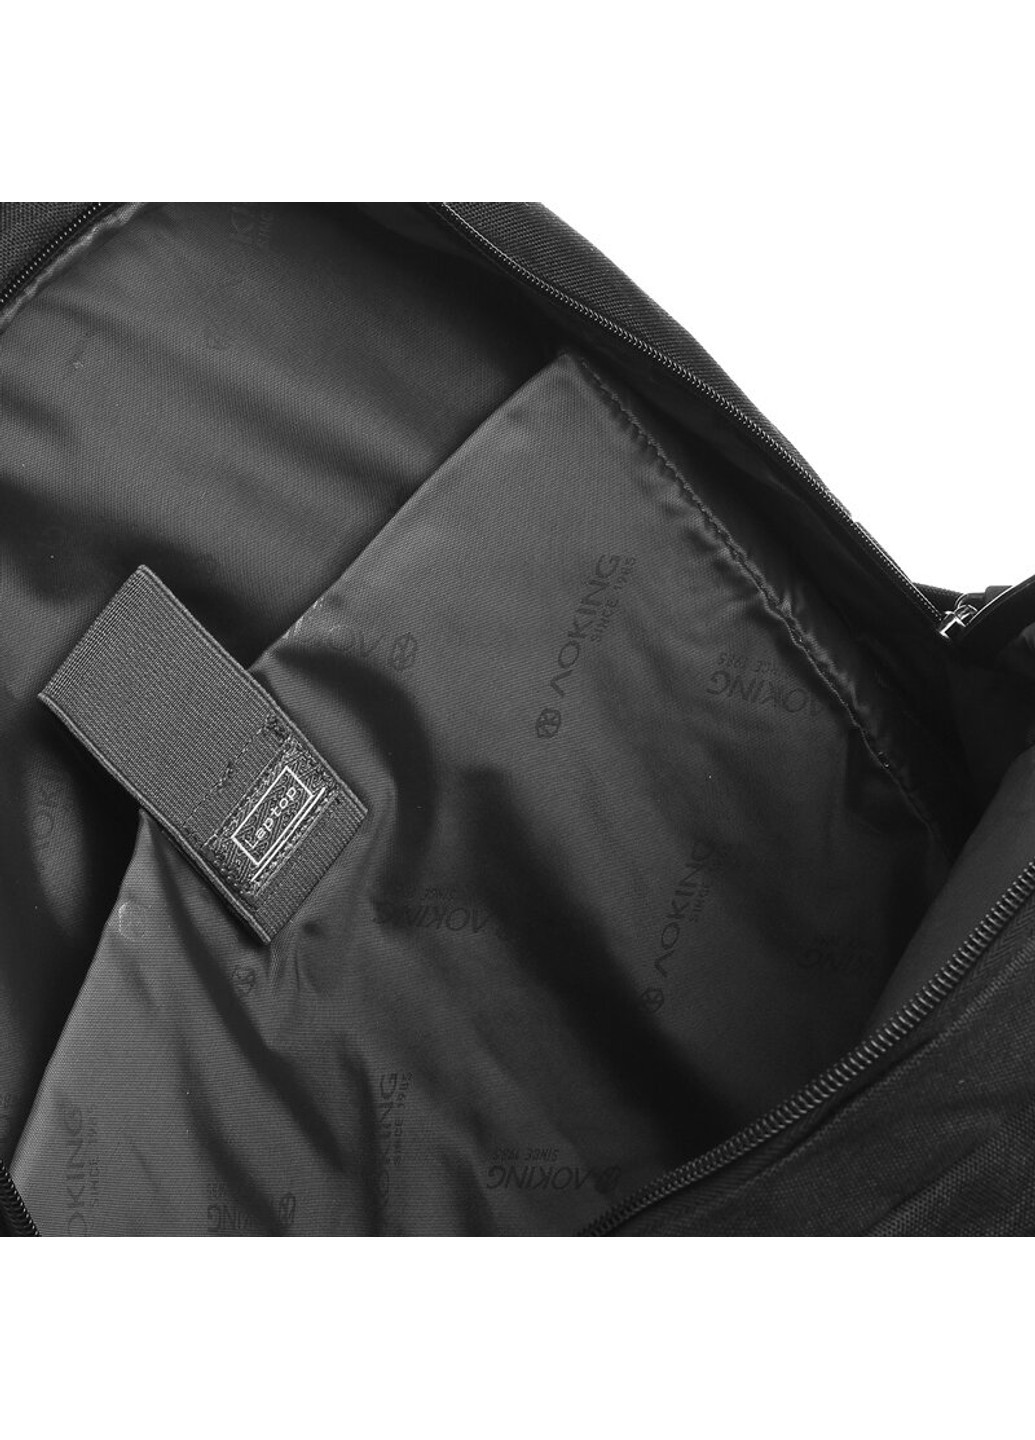 Мужской рюкзак под ноутбук 1fn77170-black Ricco Grande (271998052)